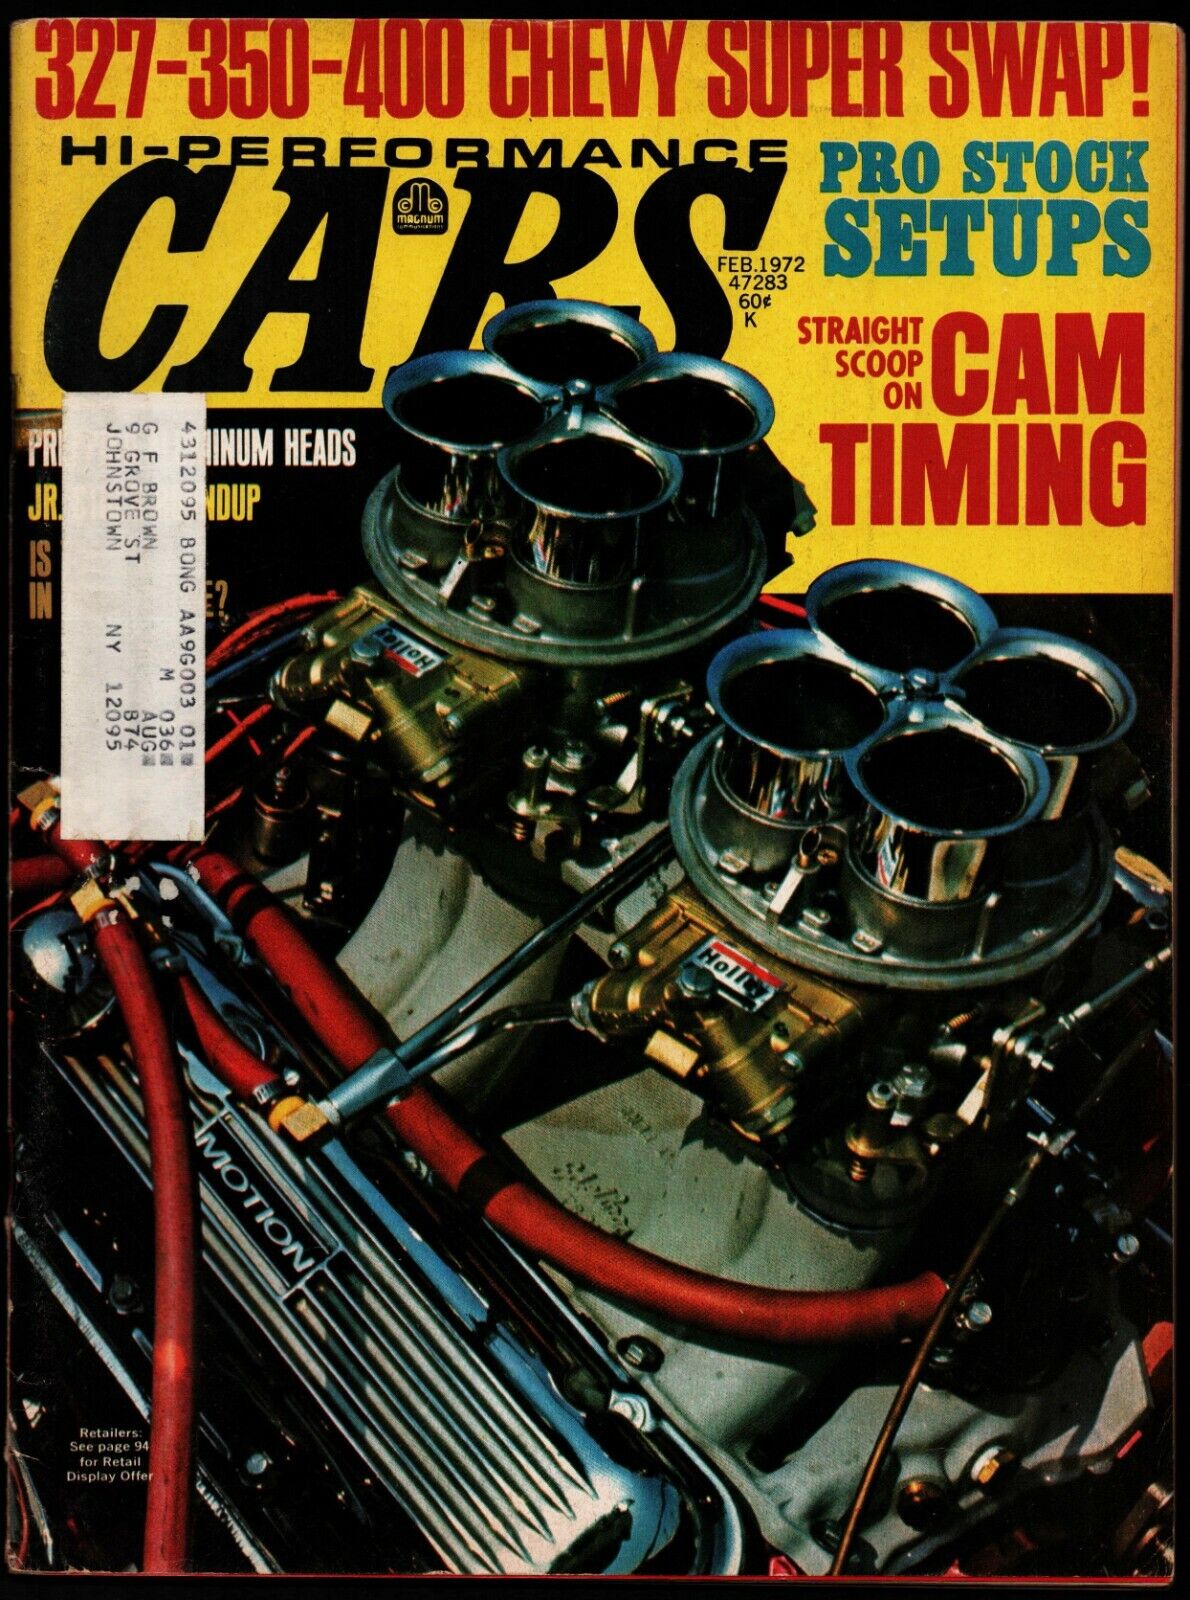 FEBRUARY 1972 HI-PERFORMANCE CARS MAGAZINE, 327-350-400 CHEVY SWAP. PRO STOCK